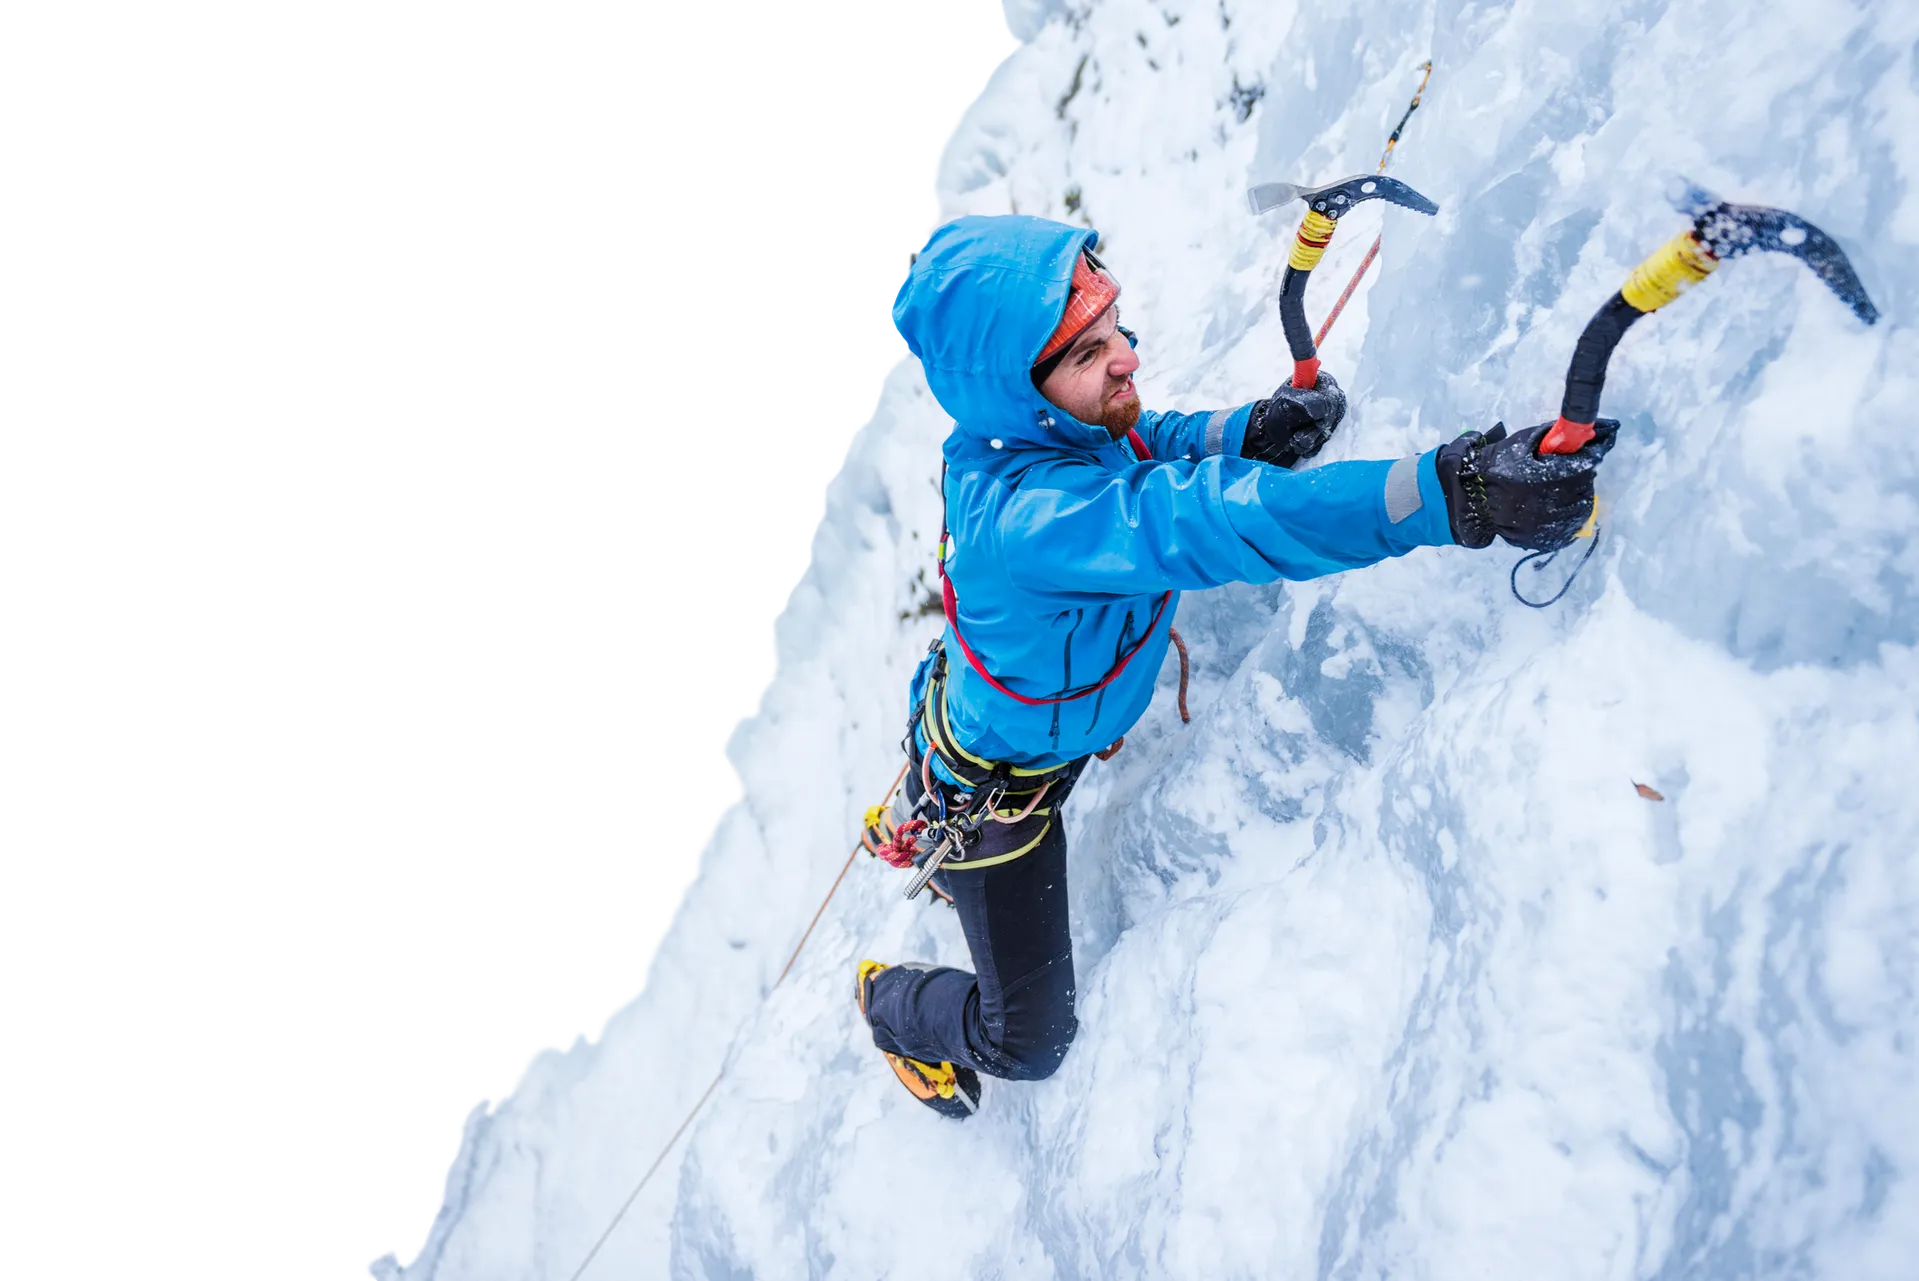 man in blue jacket ice climbing on steep rock face